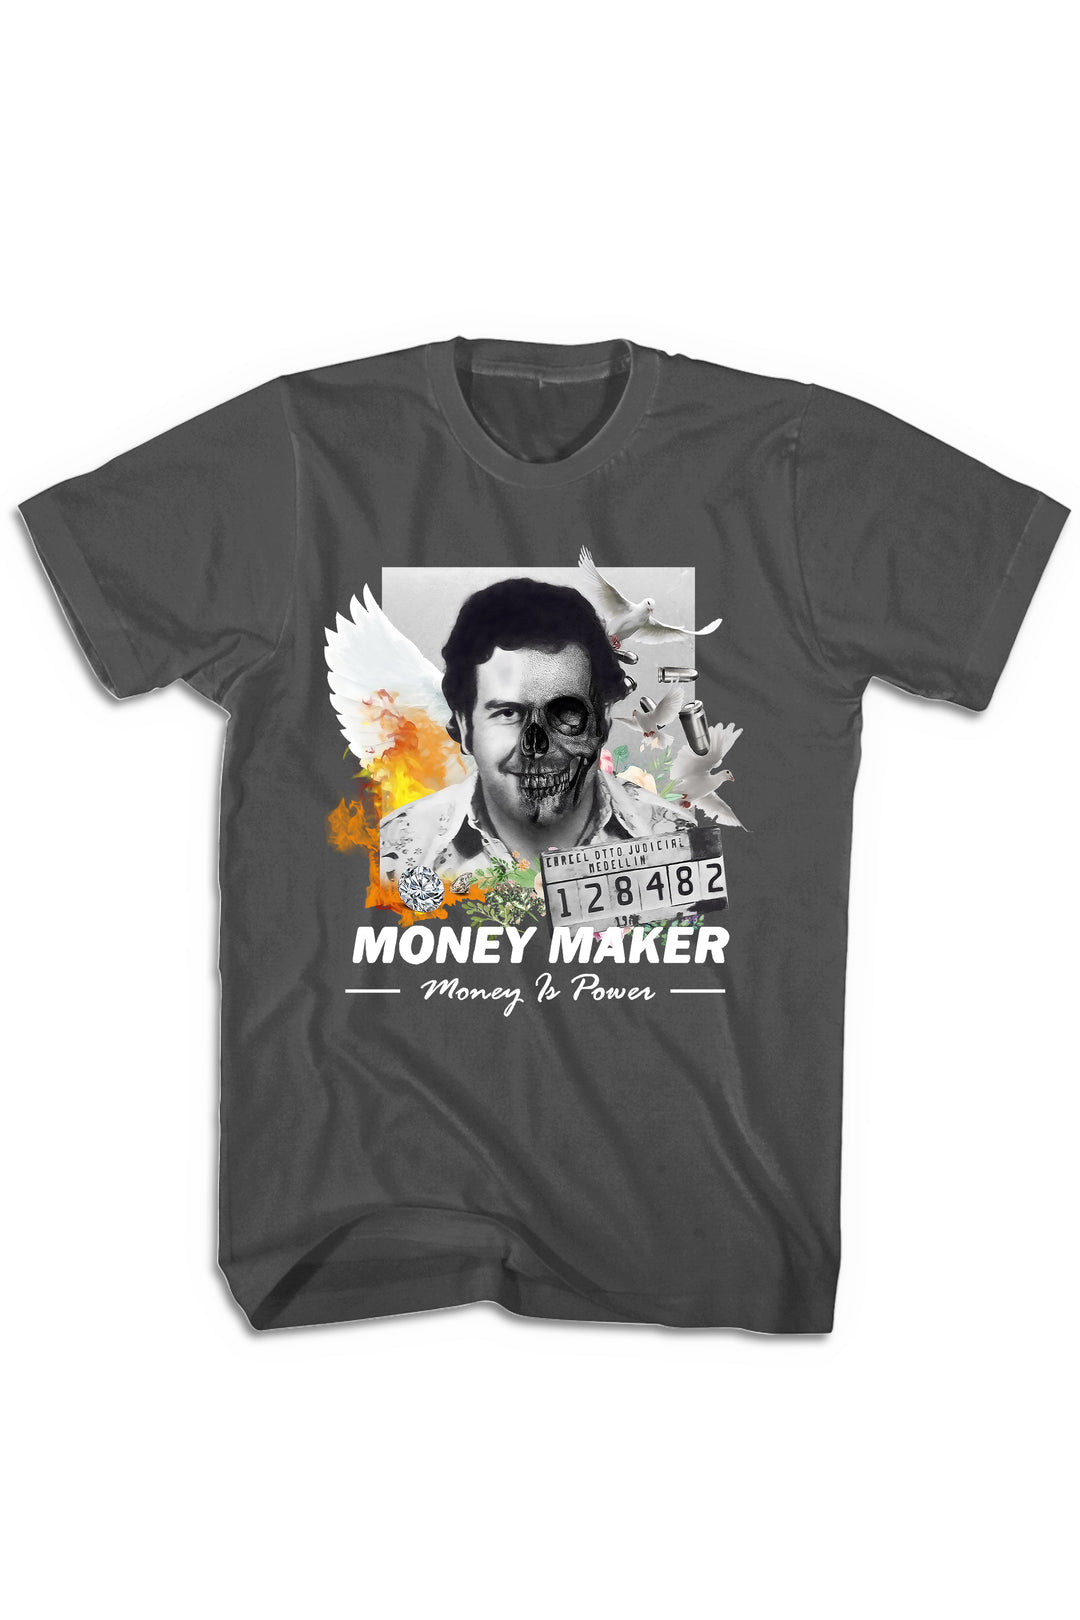 Official Money Maker Tee (Multi Color Logo) - Zamage